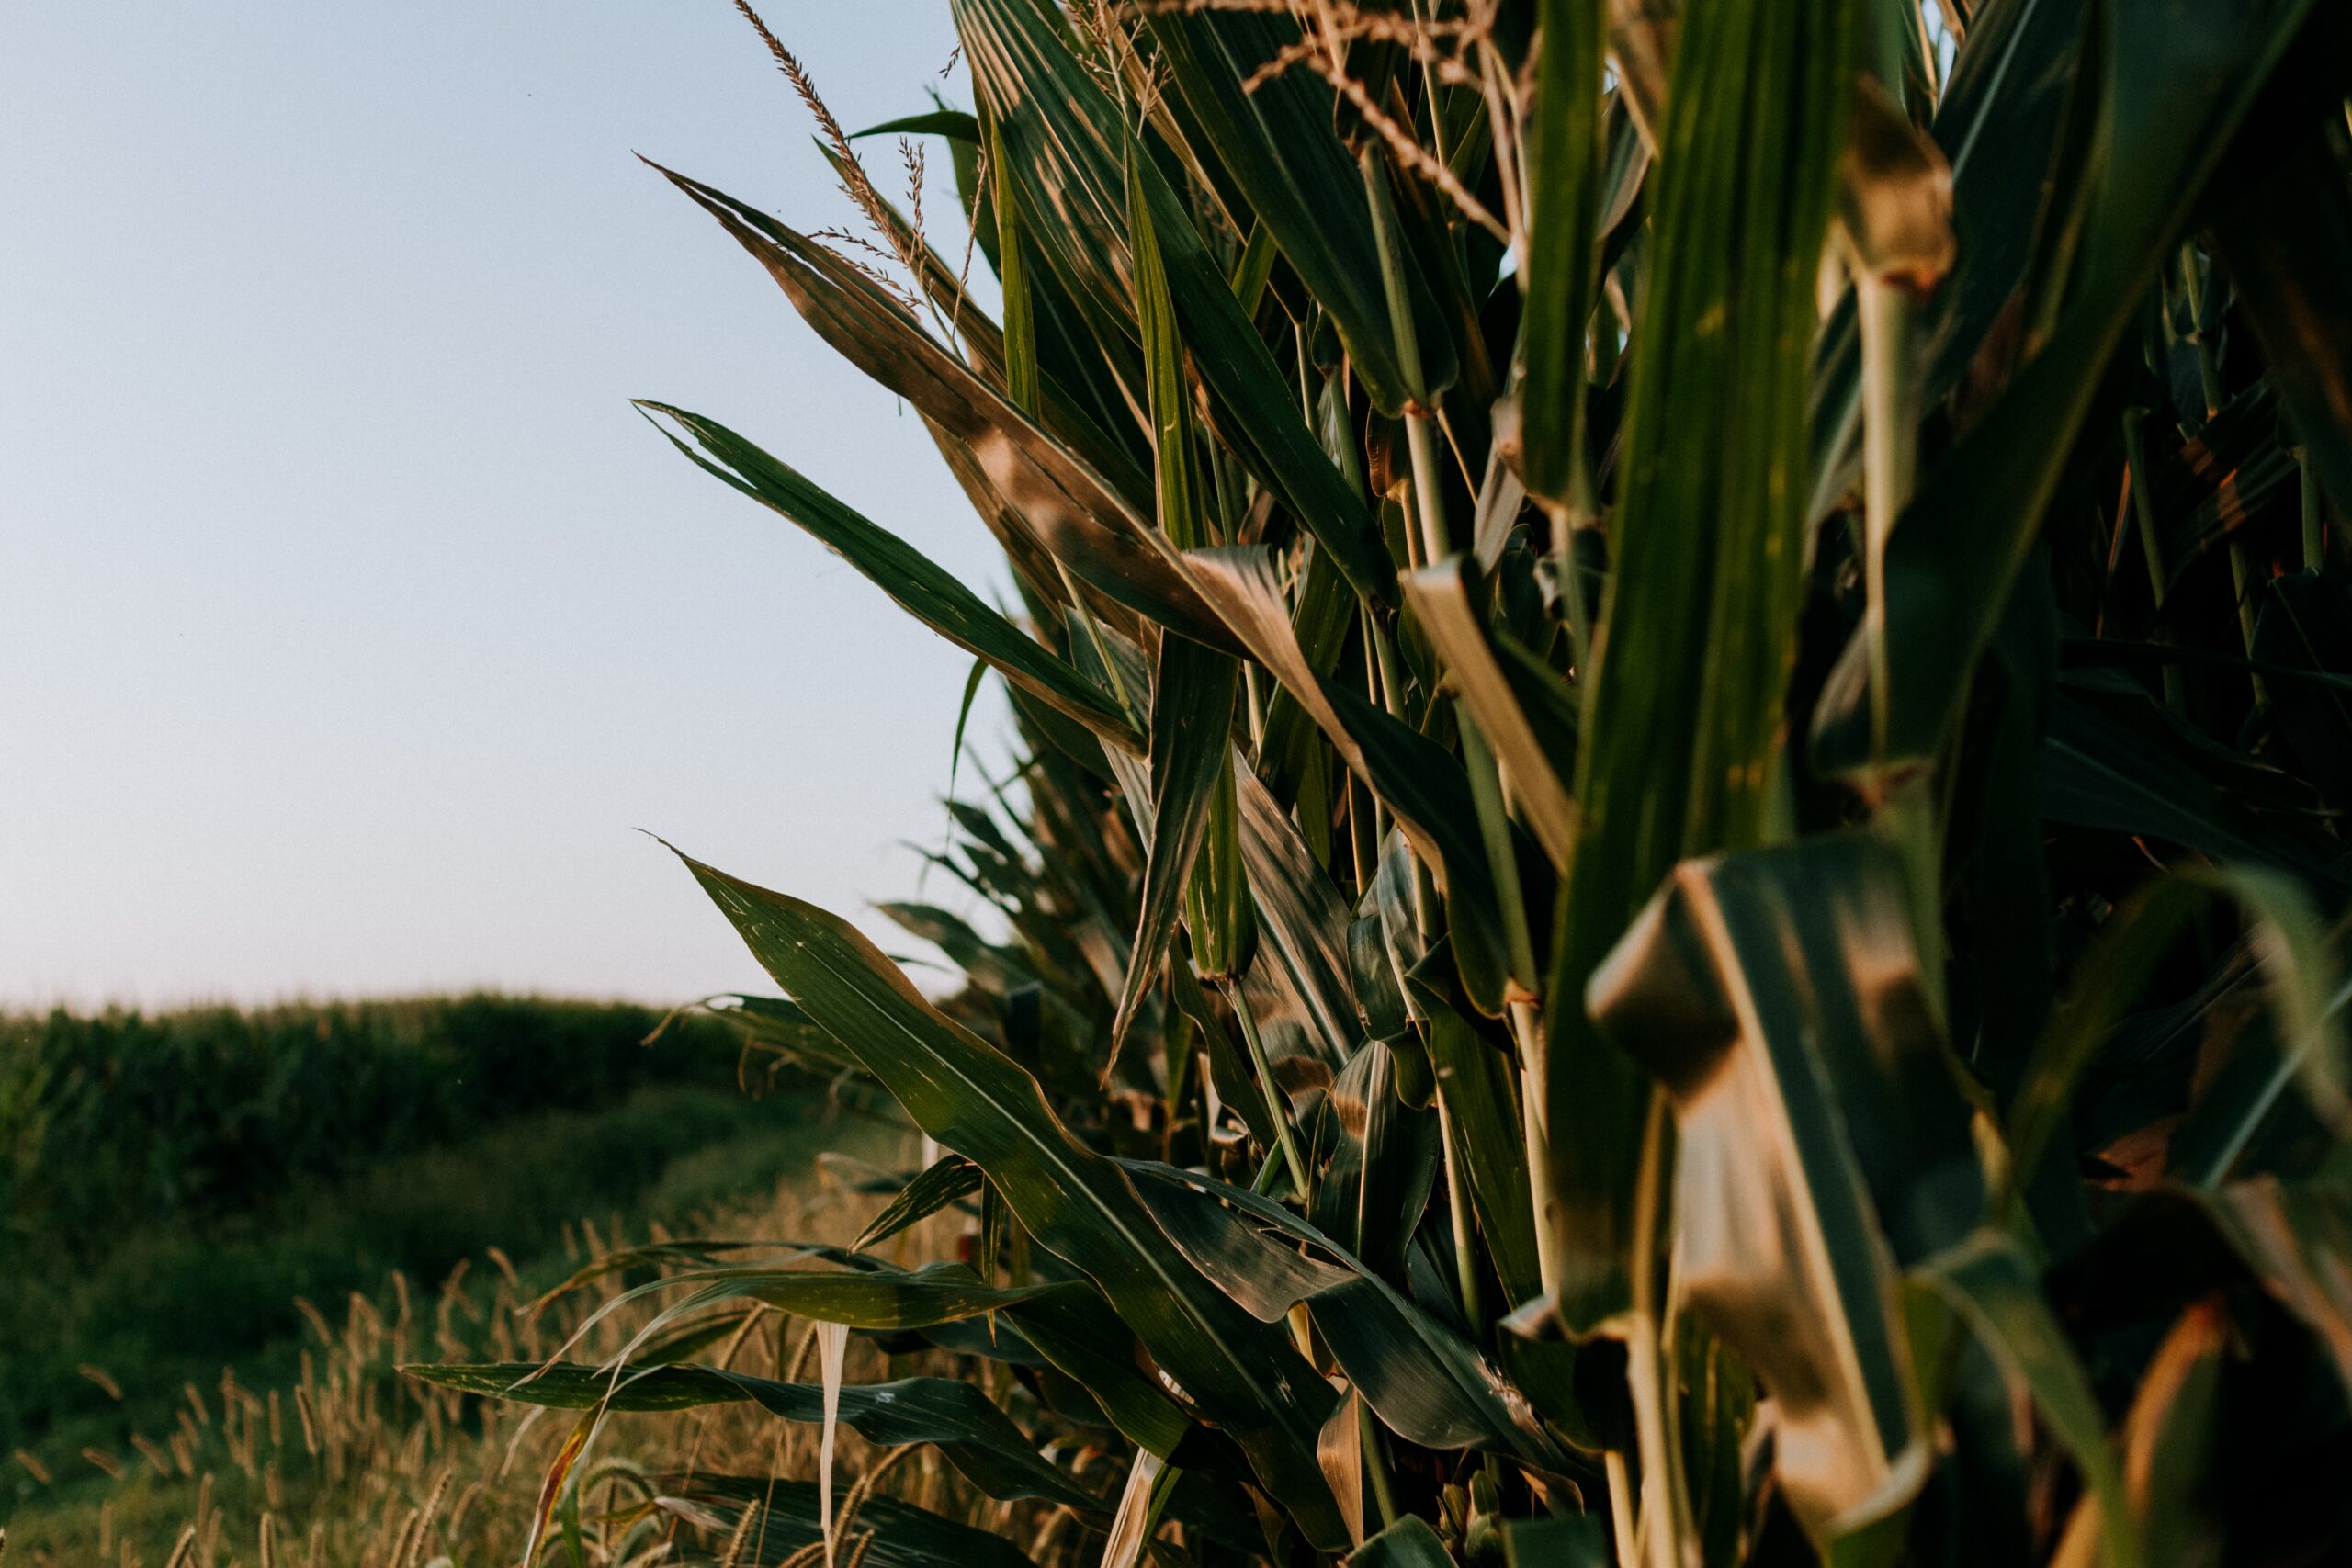 Summer Memories from Iowa’s Tall Corn Fields to Washington’s Peaks